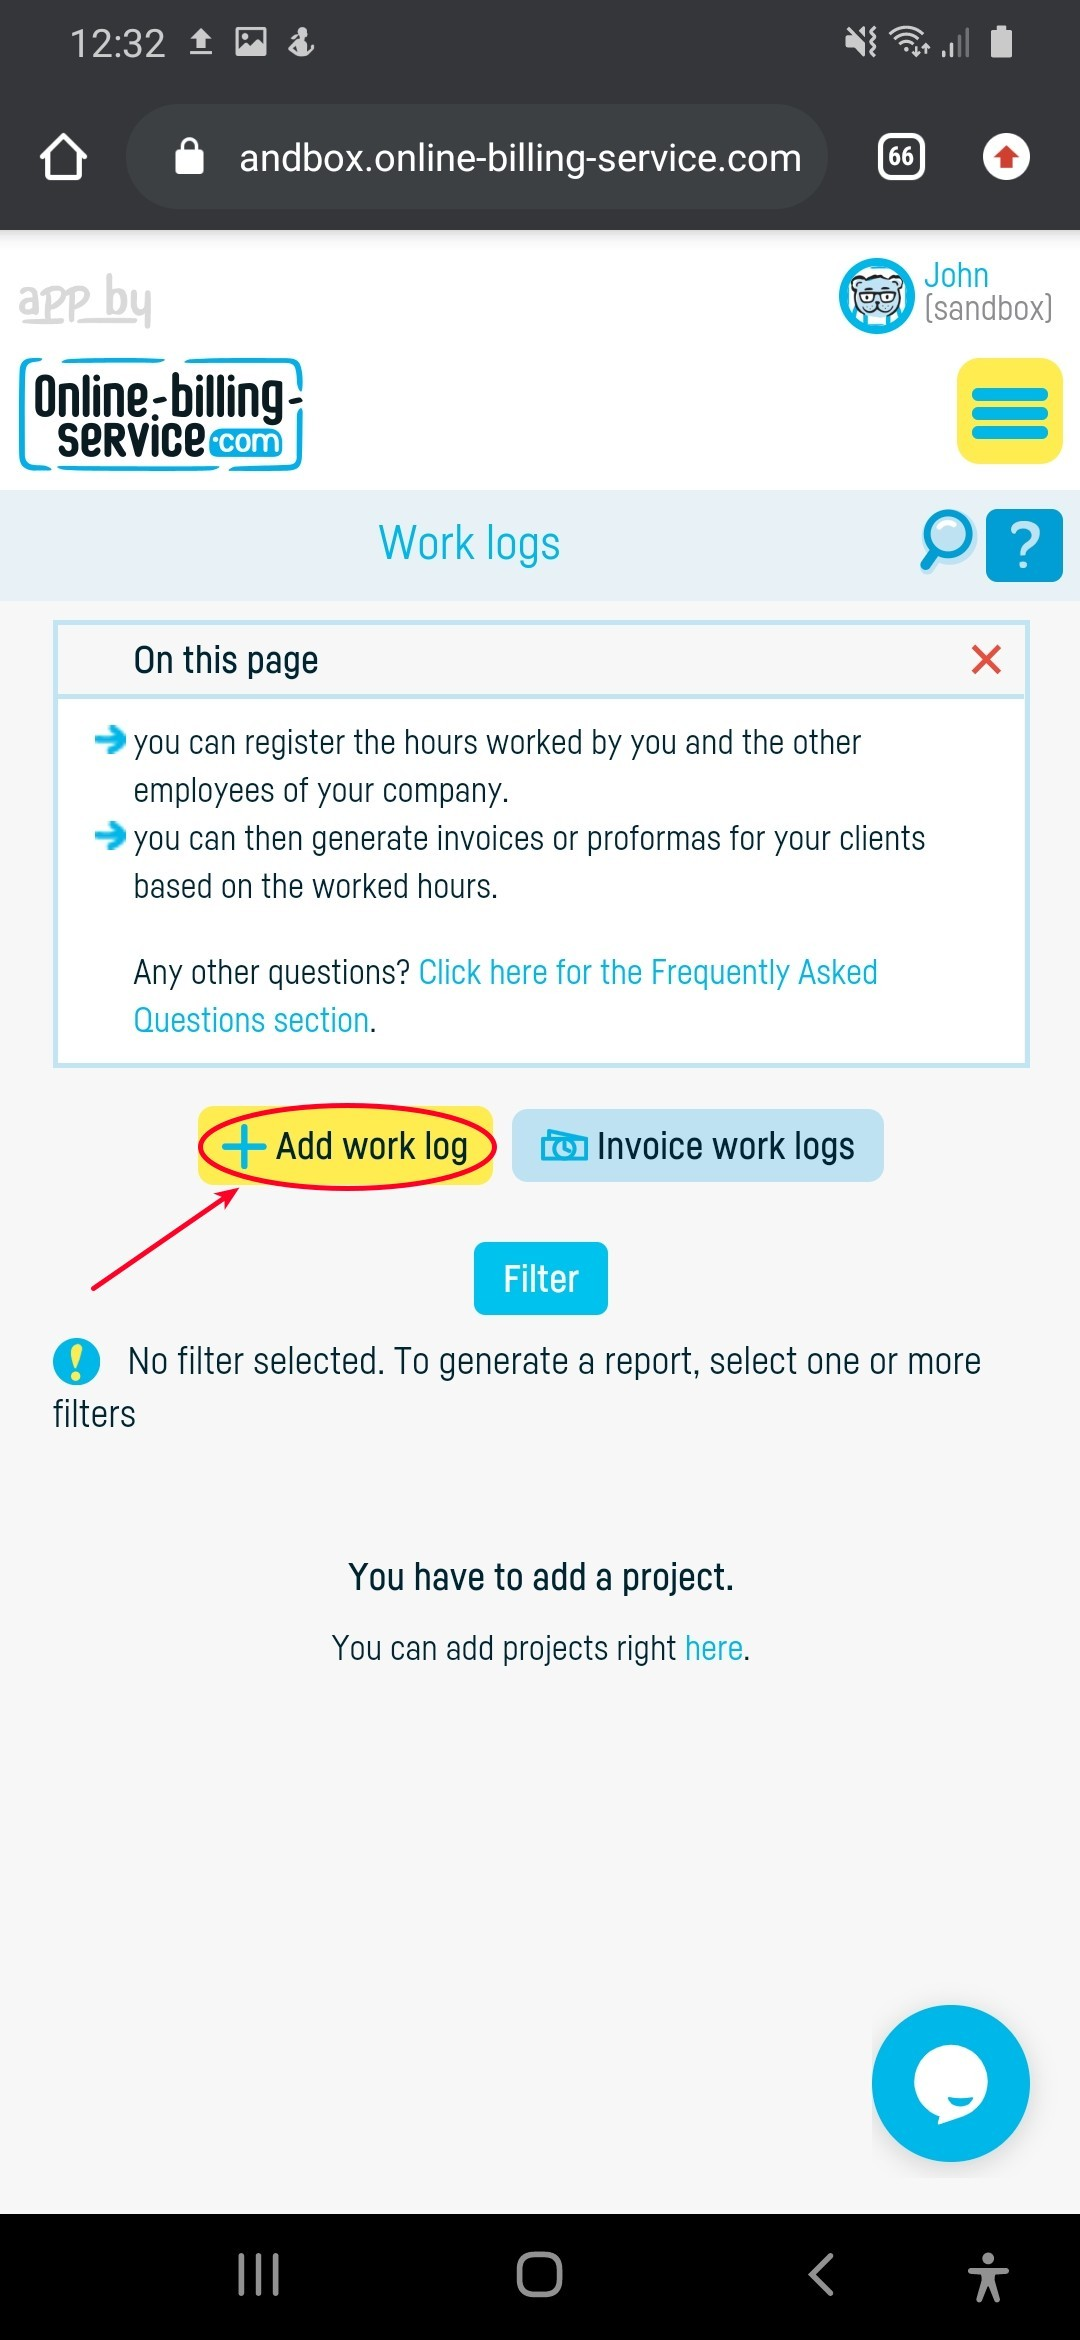 Work log adding instructions - step 1